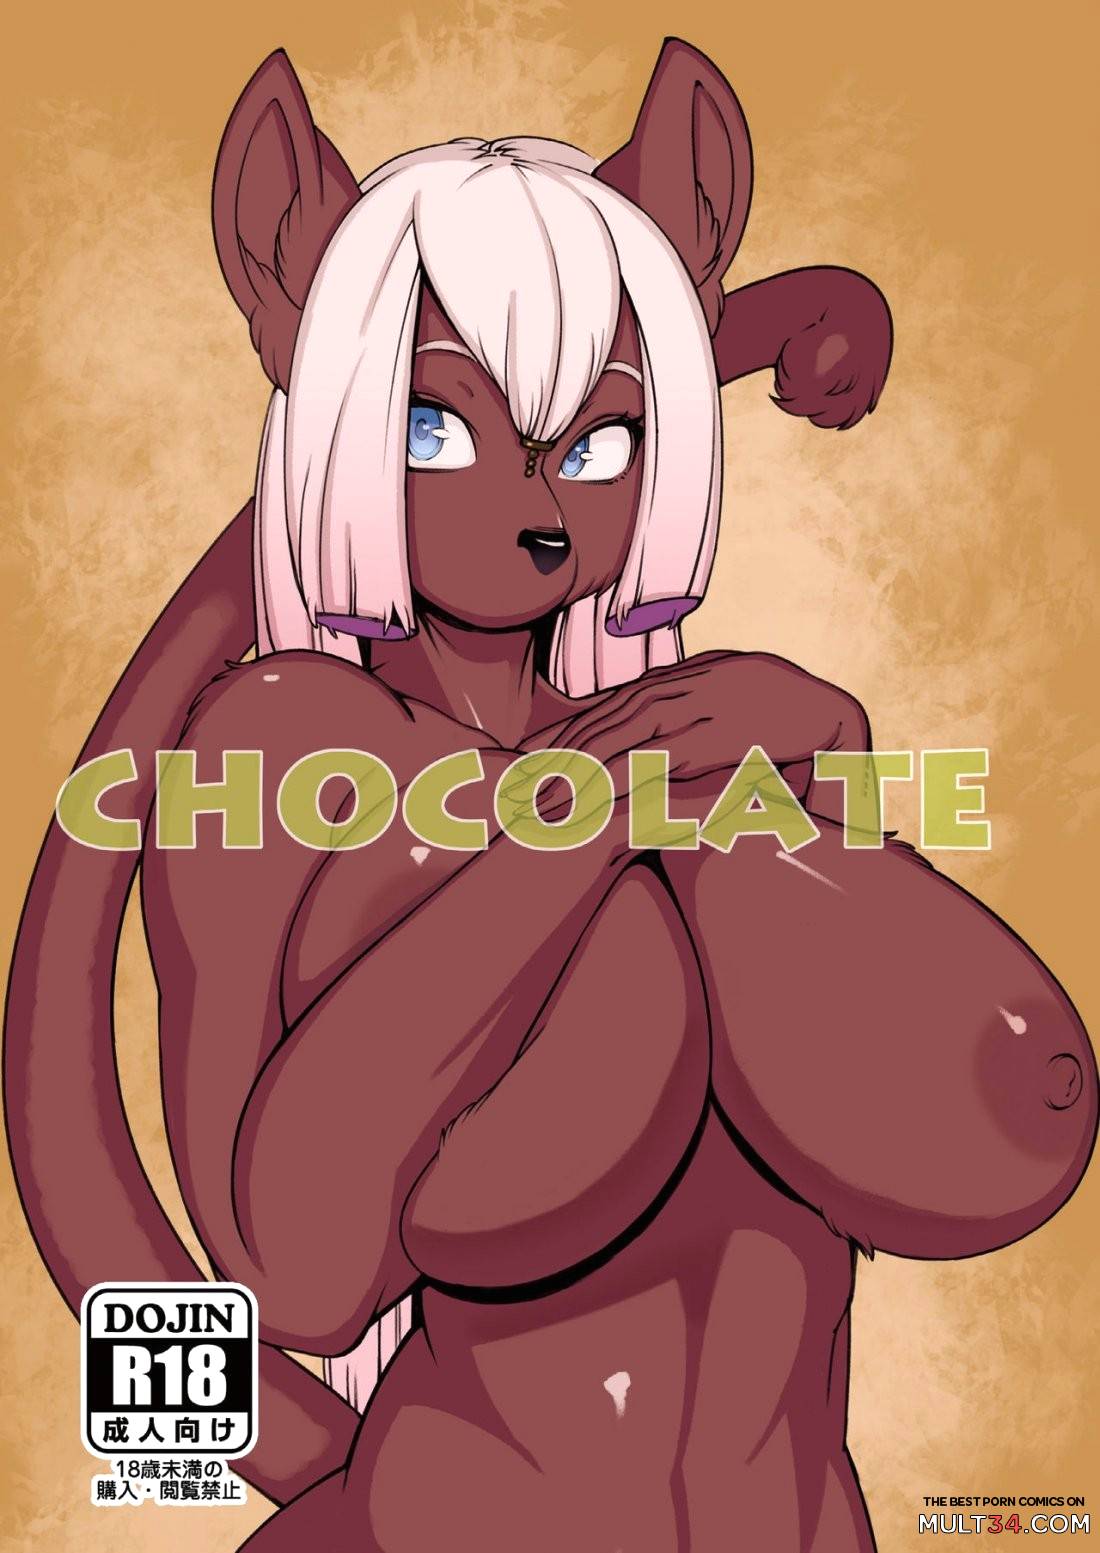 Chocolate souffle yiff porn comic